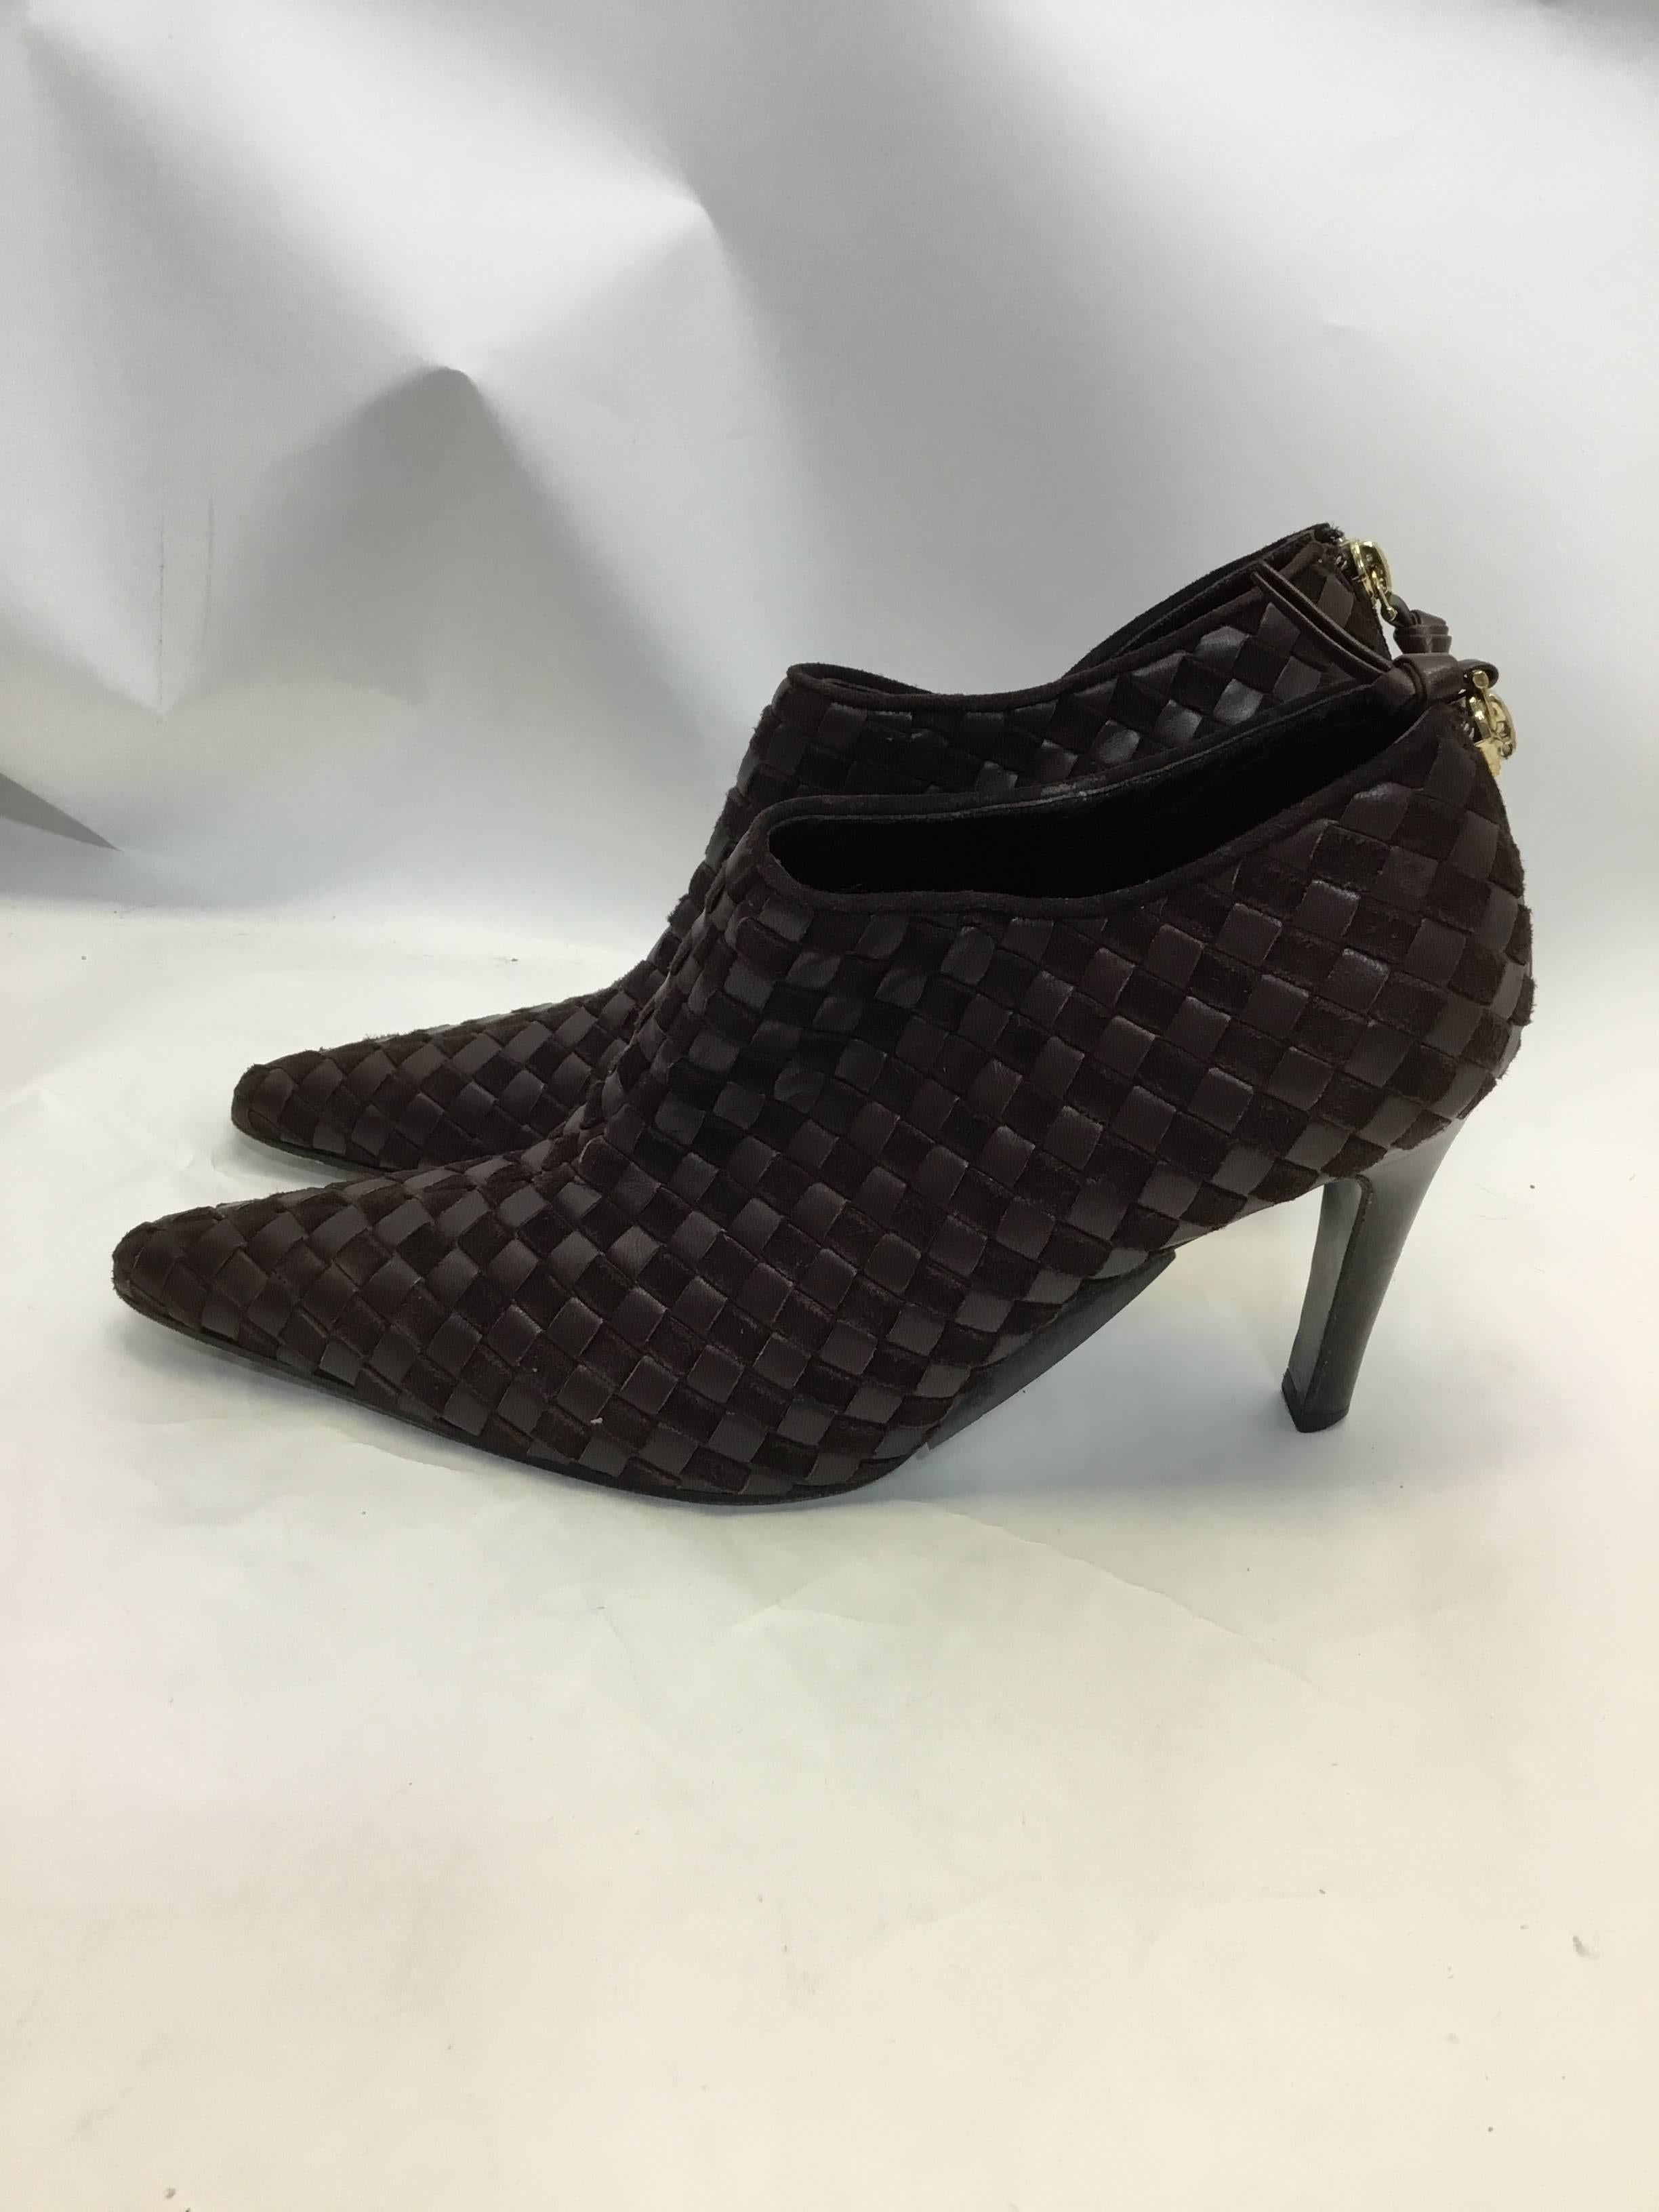 Bottega Veneta Brown Leather Ankle Booties
$299
Size 37.5
3.5 inch heel
Zip up ankle 